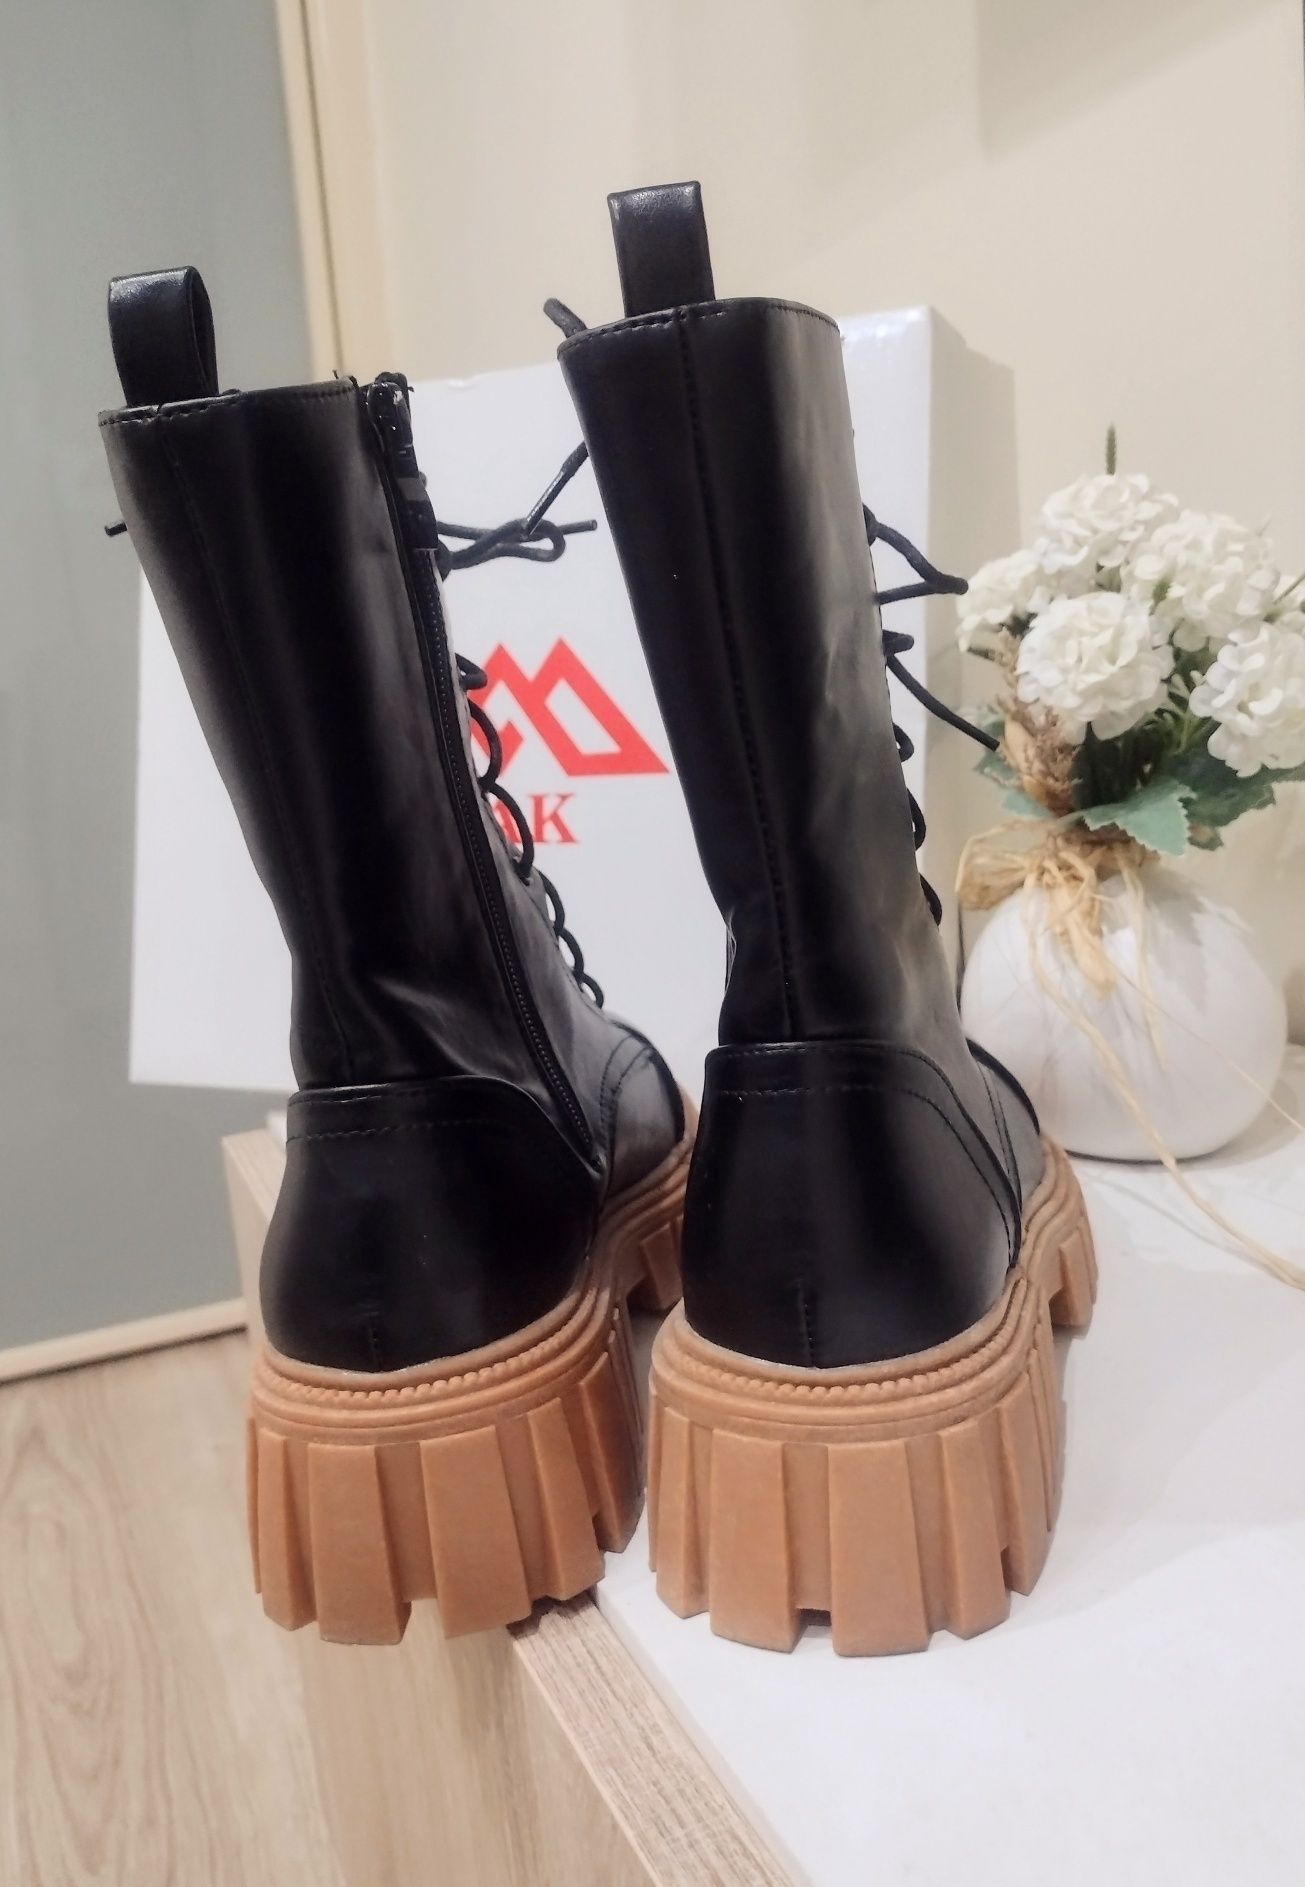 Дамски черни кожени боти MAK естествена кожа кубинки ботуши обувки 38